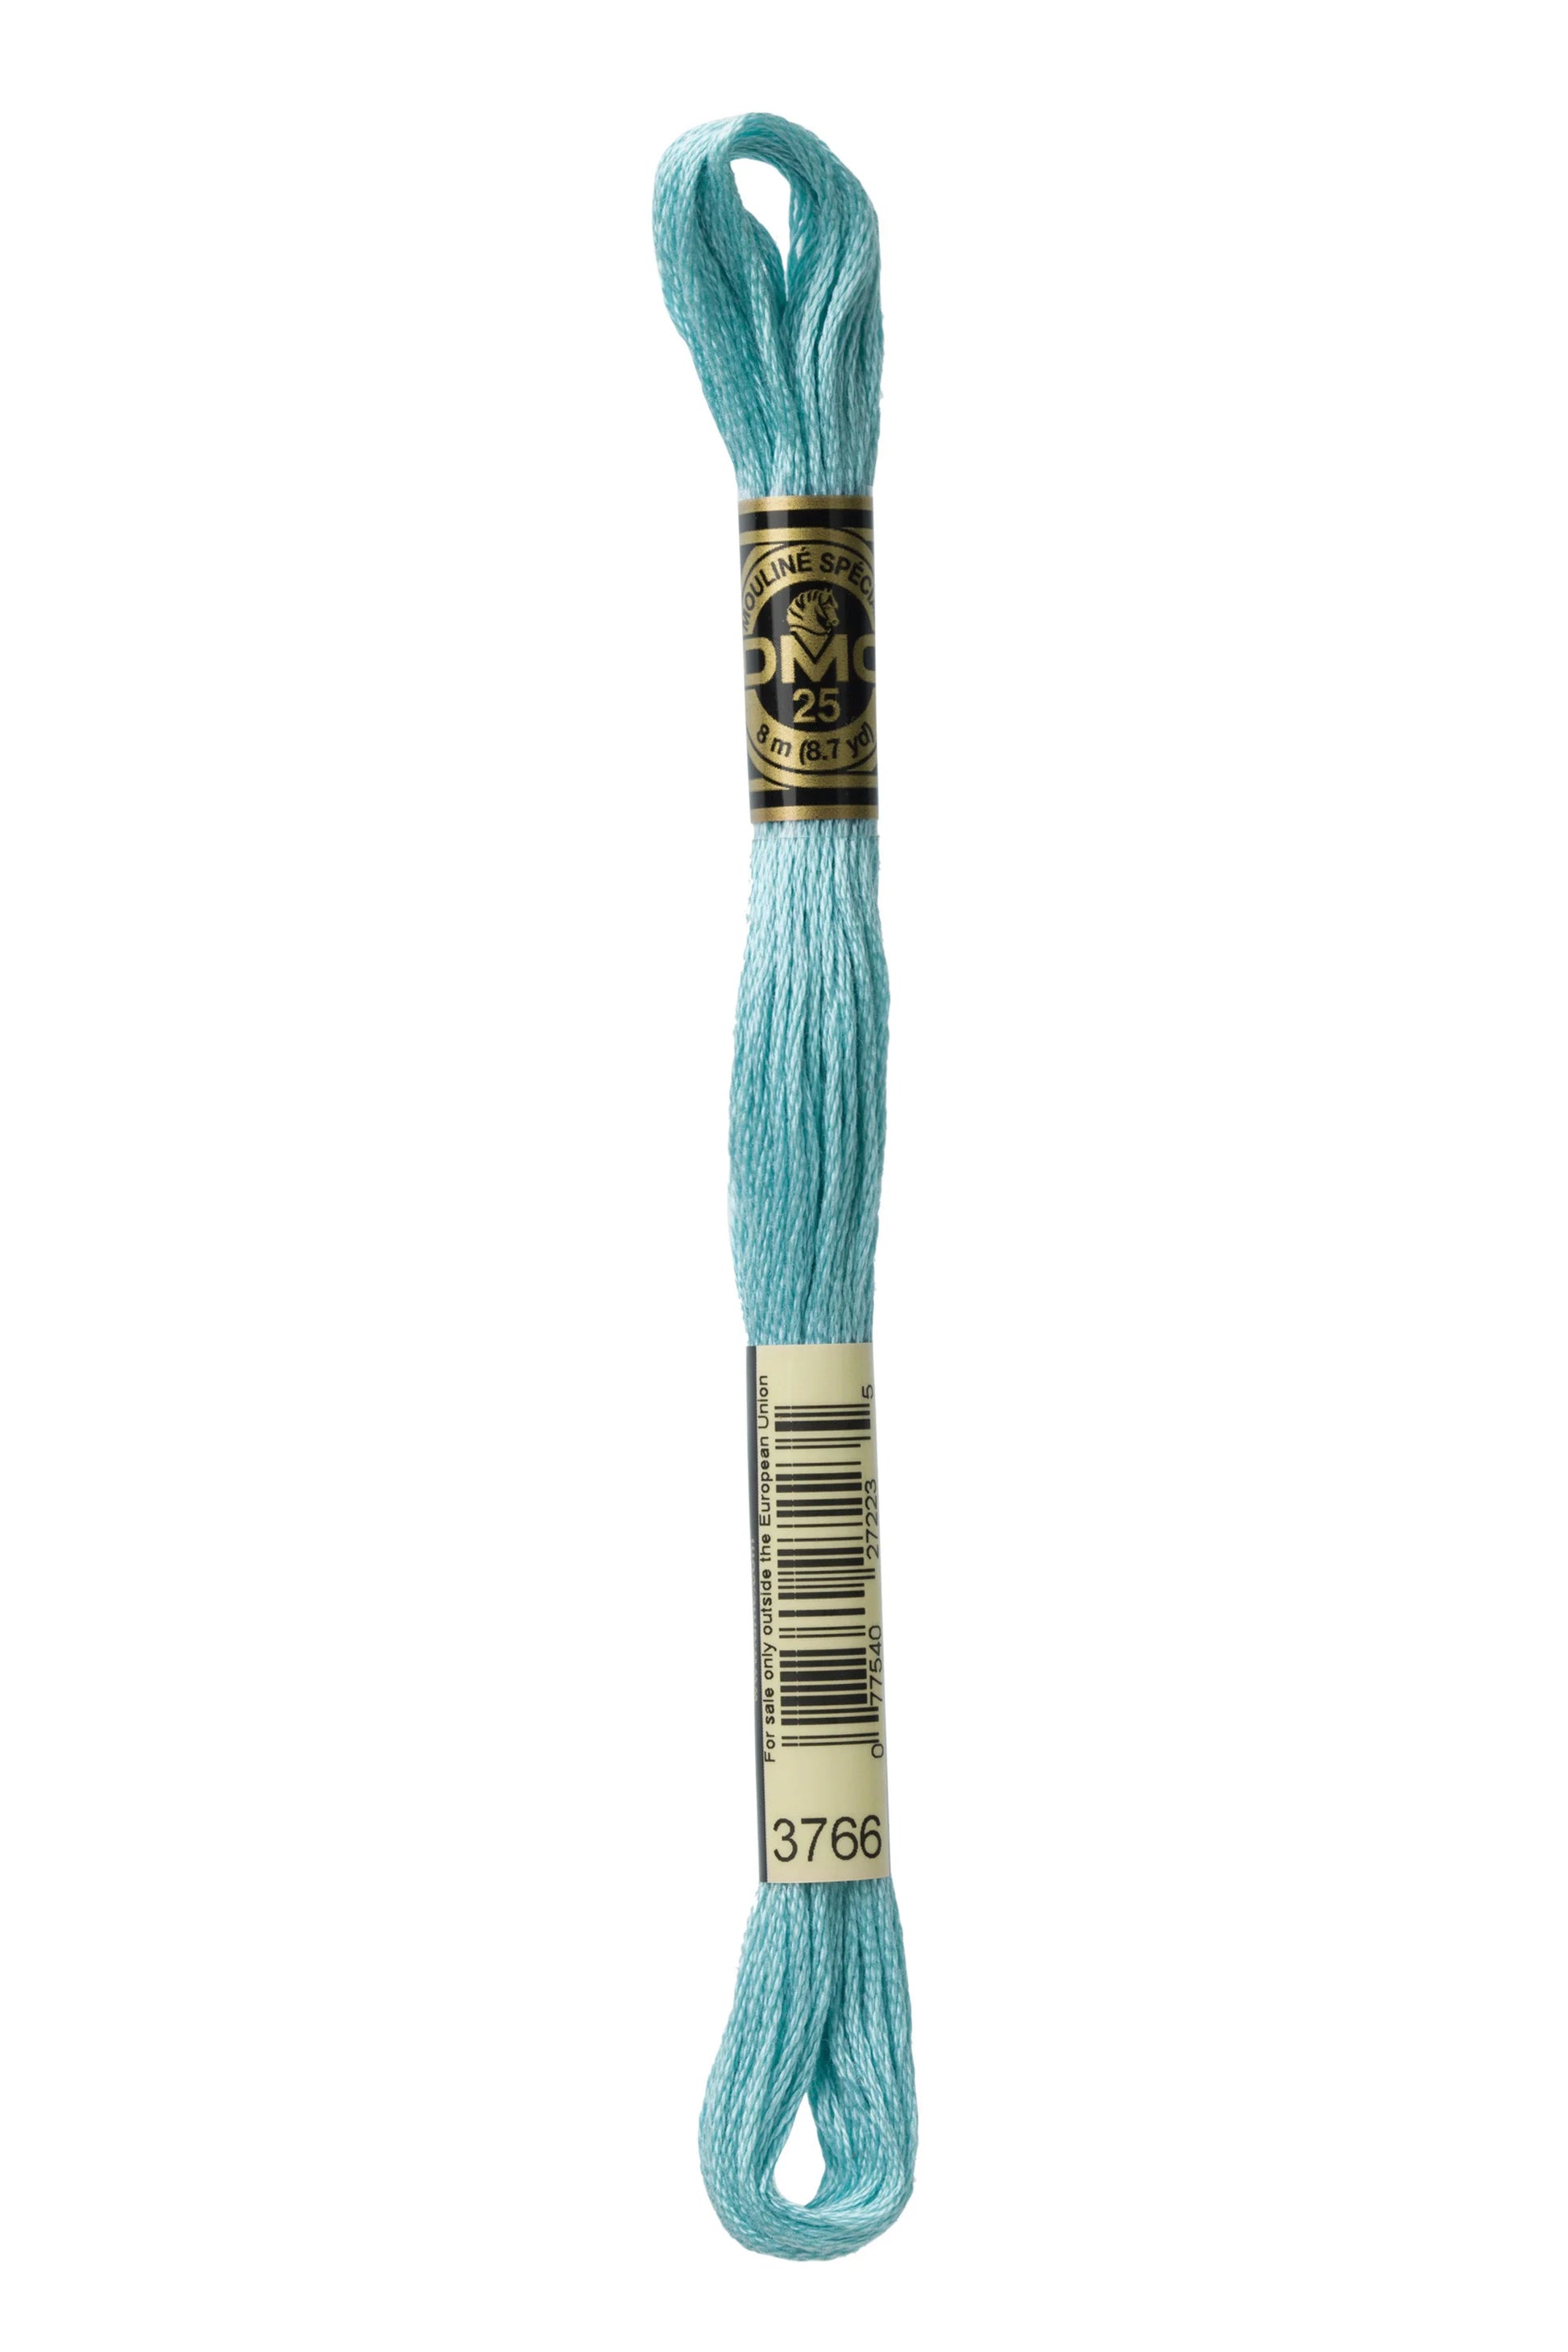 DMC 3766 - Peacock Blue - Light - DMC 6 Strand Embroidery Thread, Thread & Floss, Thread & Floss, The Crafty Grimalkin - A Cross Stitch Store